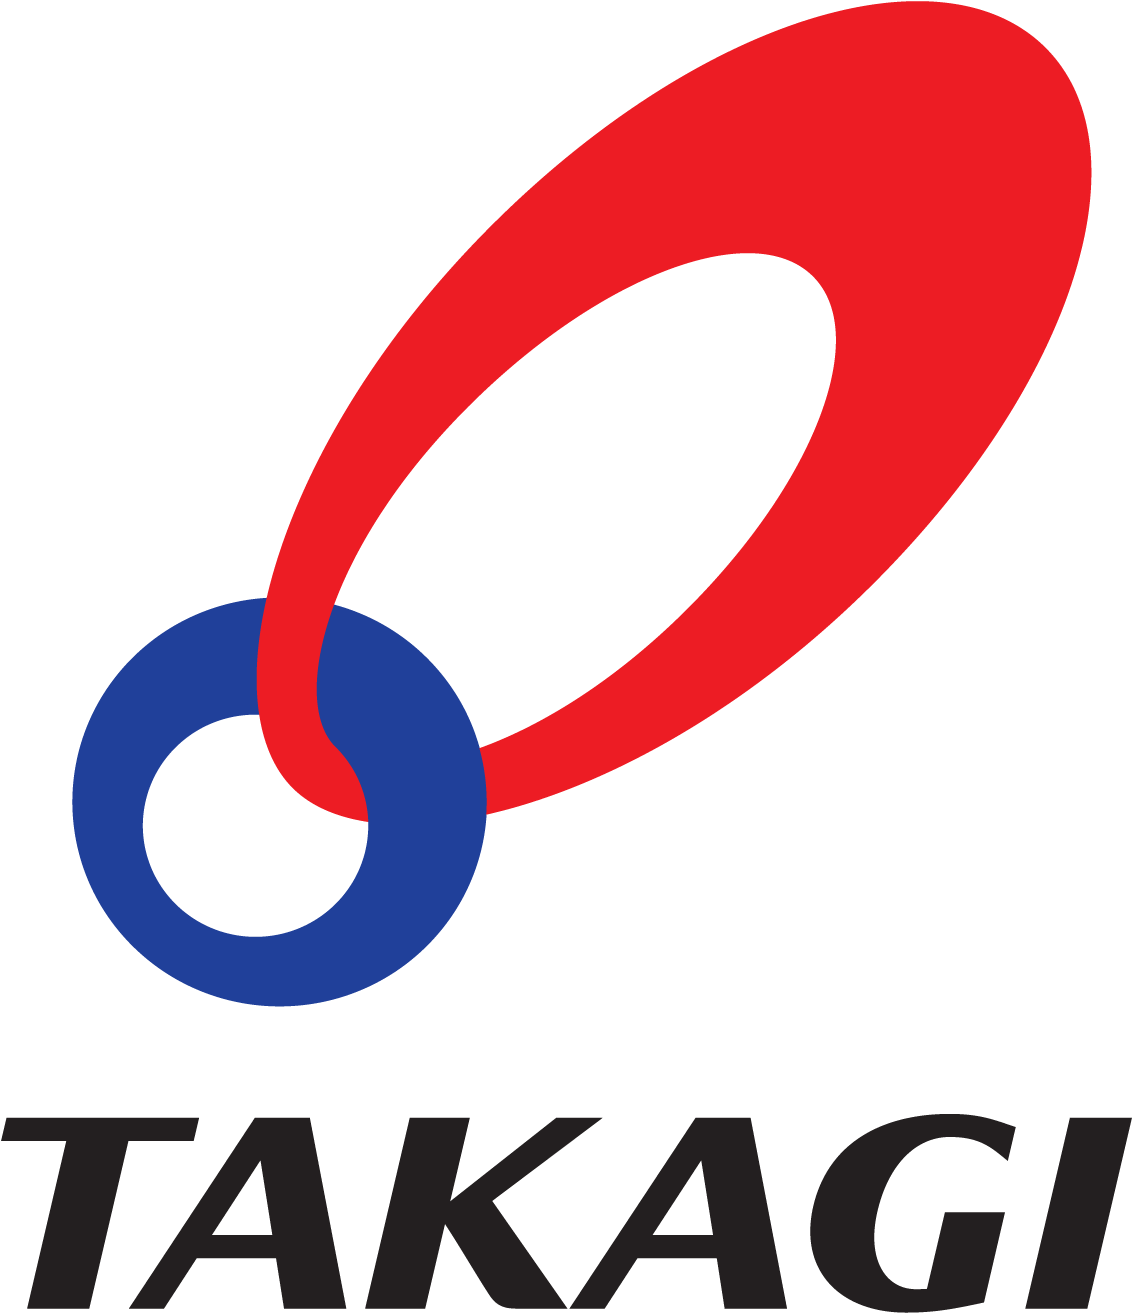 Media Bank - Takagi Tankless Water Heater Logo (1210x1329)